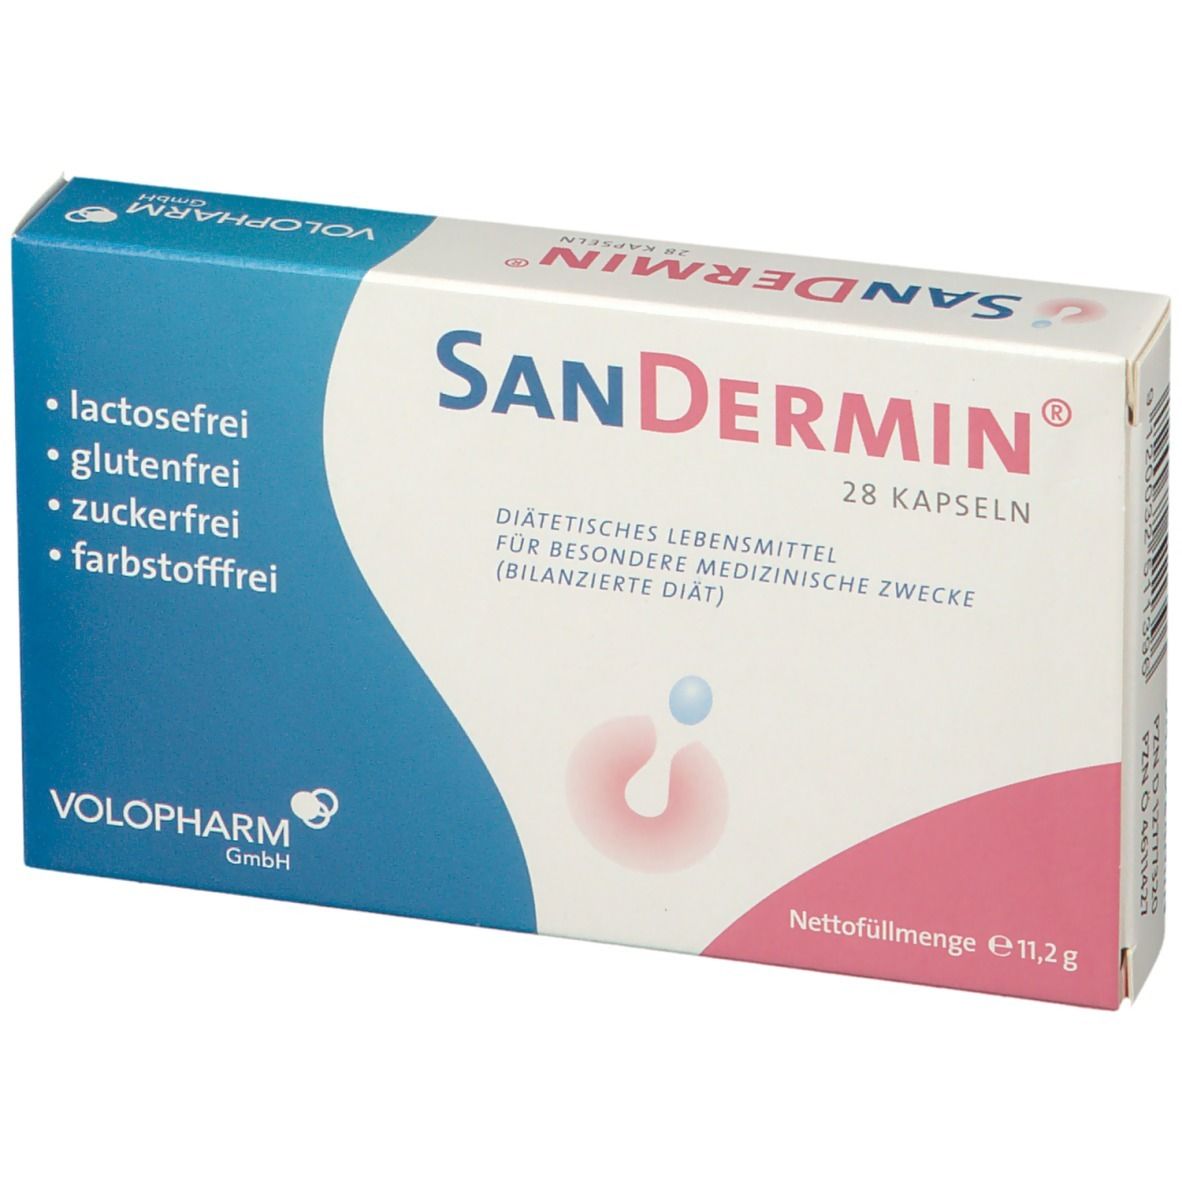 SanDermin®